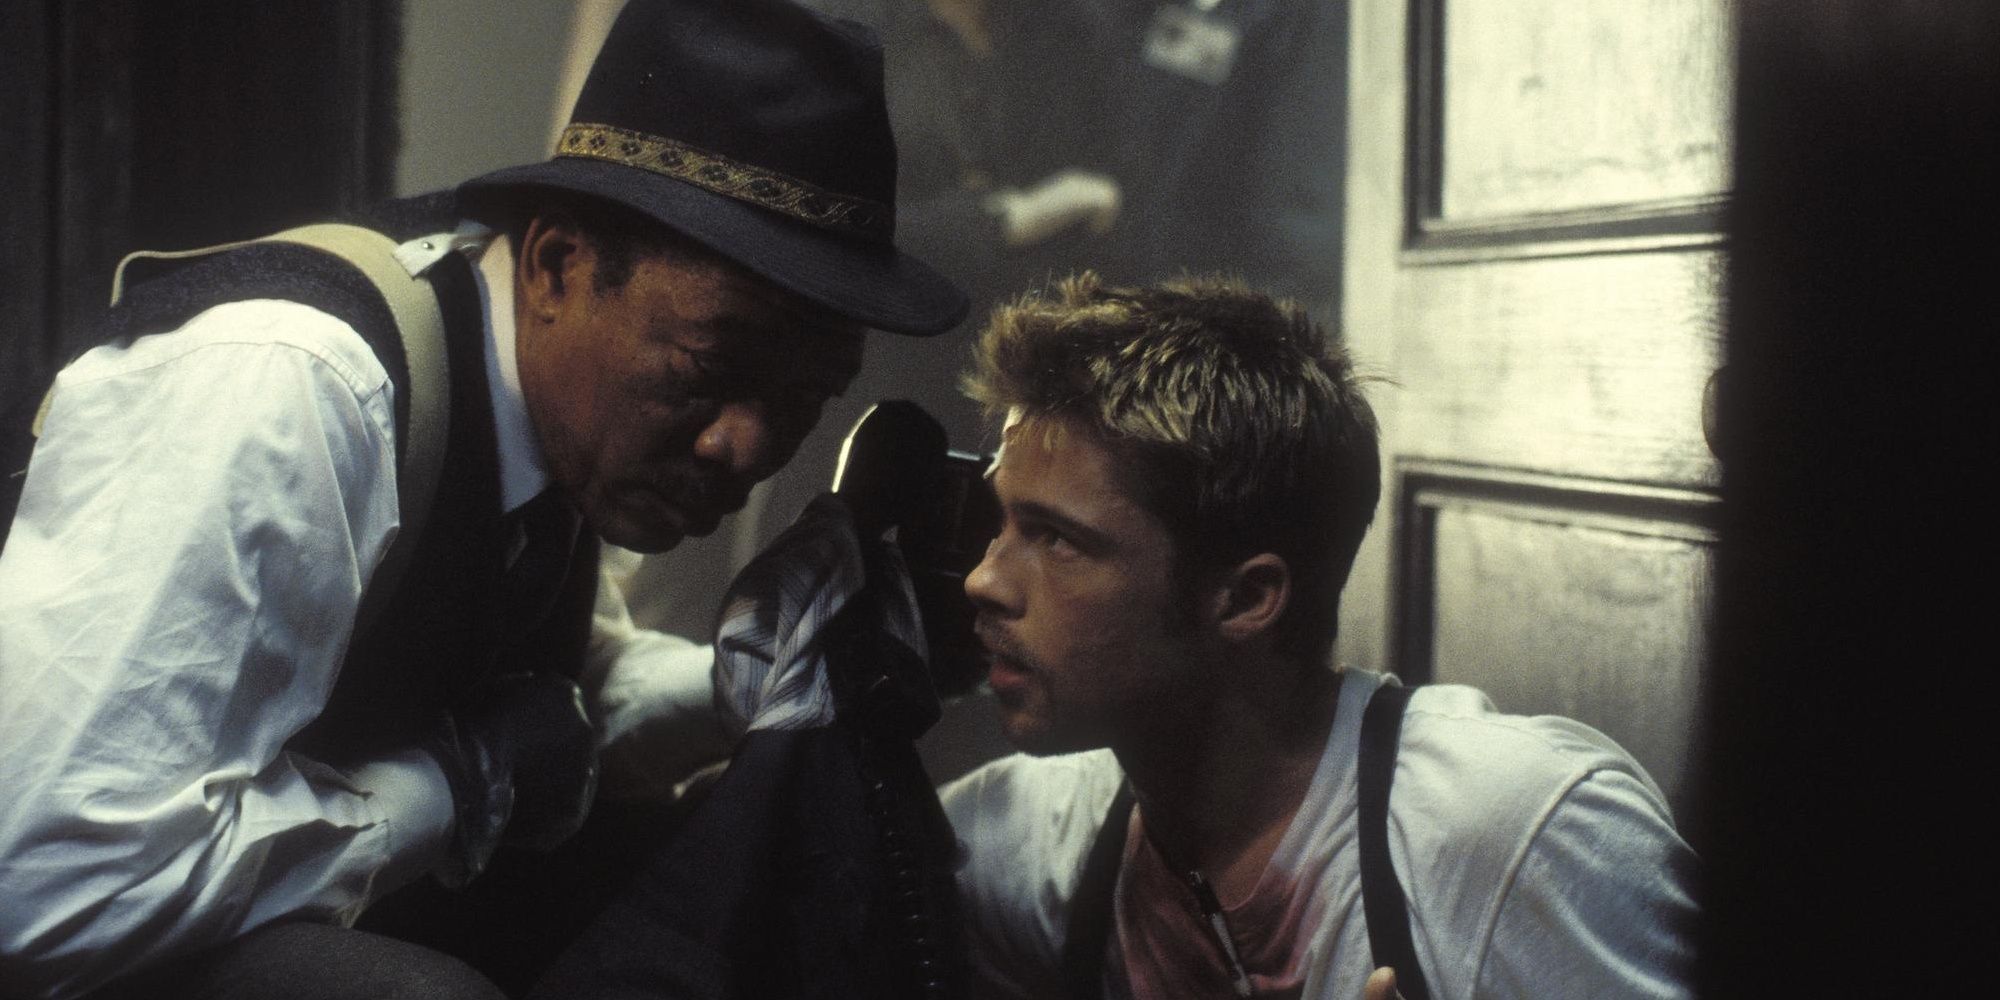 Se7en's Morgan Freeman and Brad Pitt